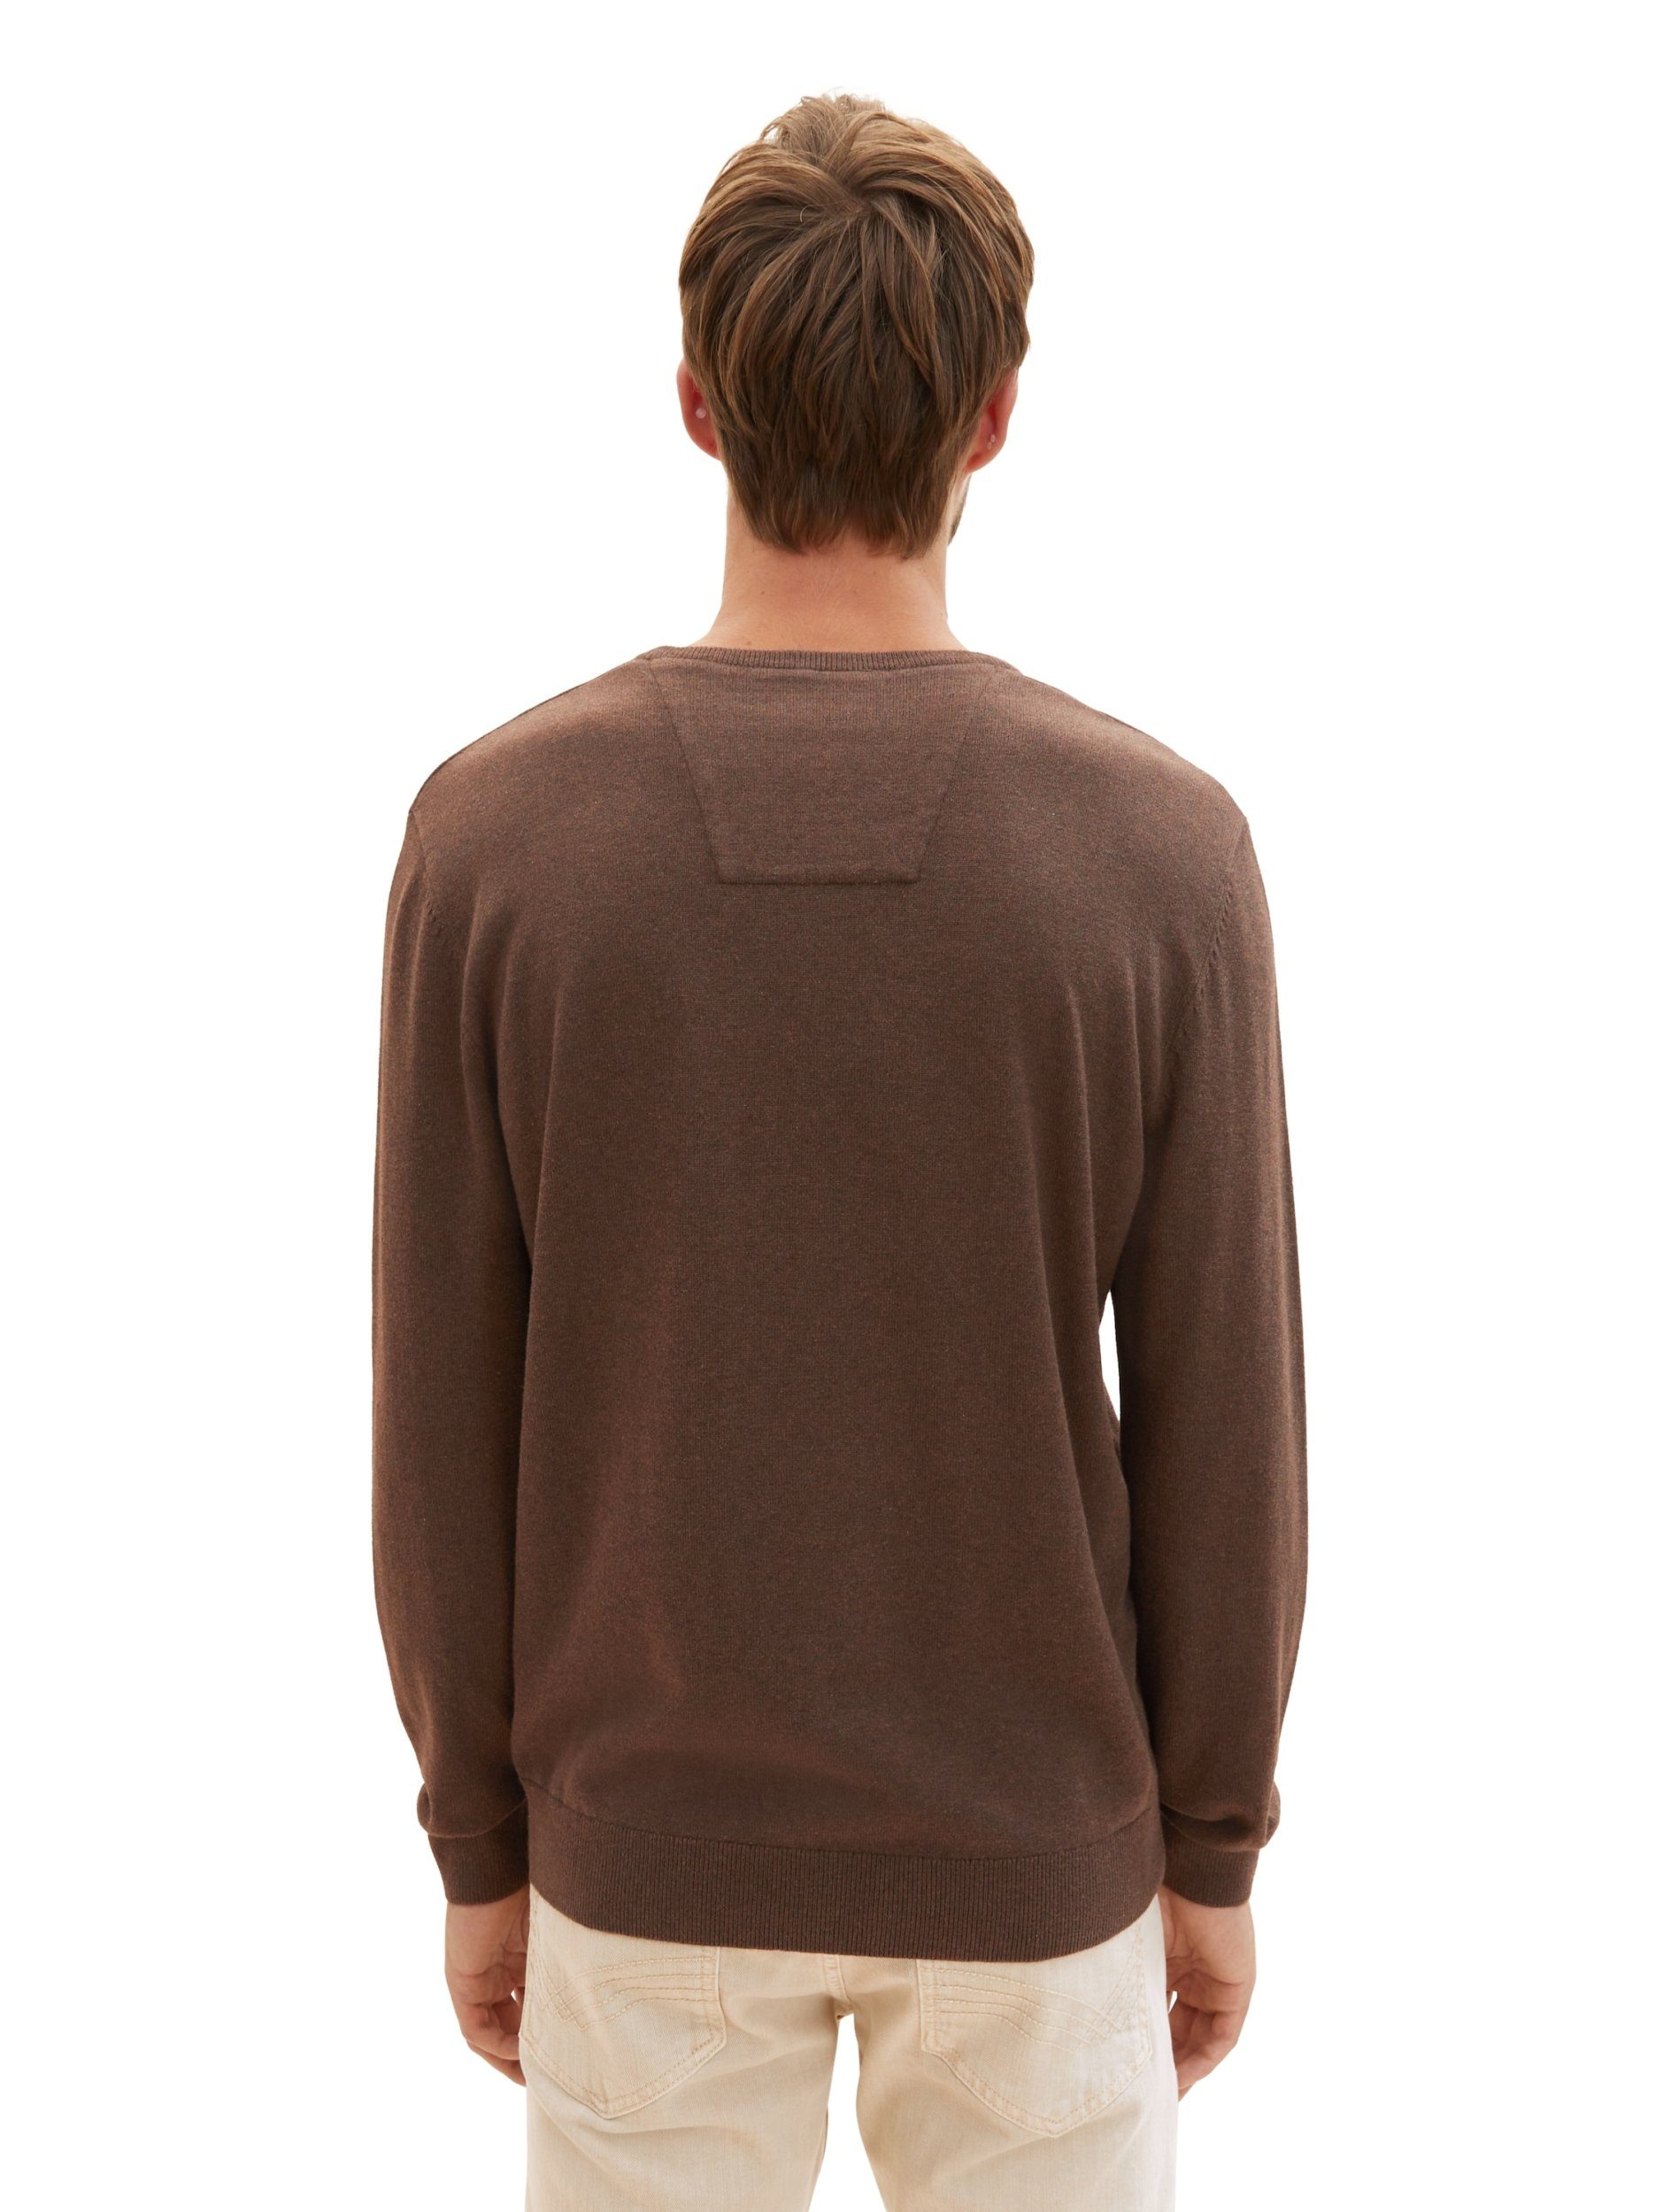 Strickpullover TOM basic TAILOR v-neck 32717 sweater